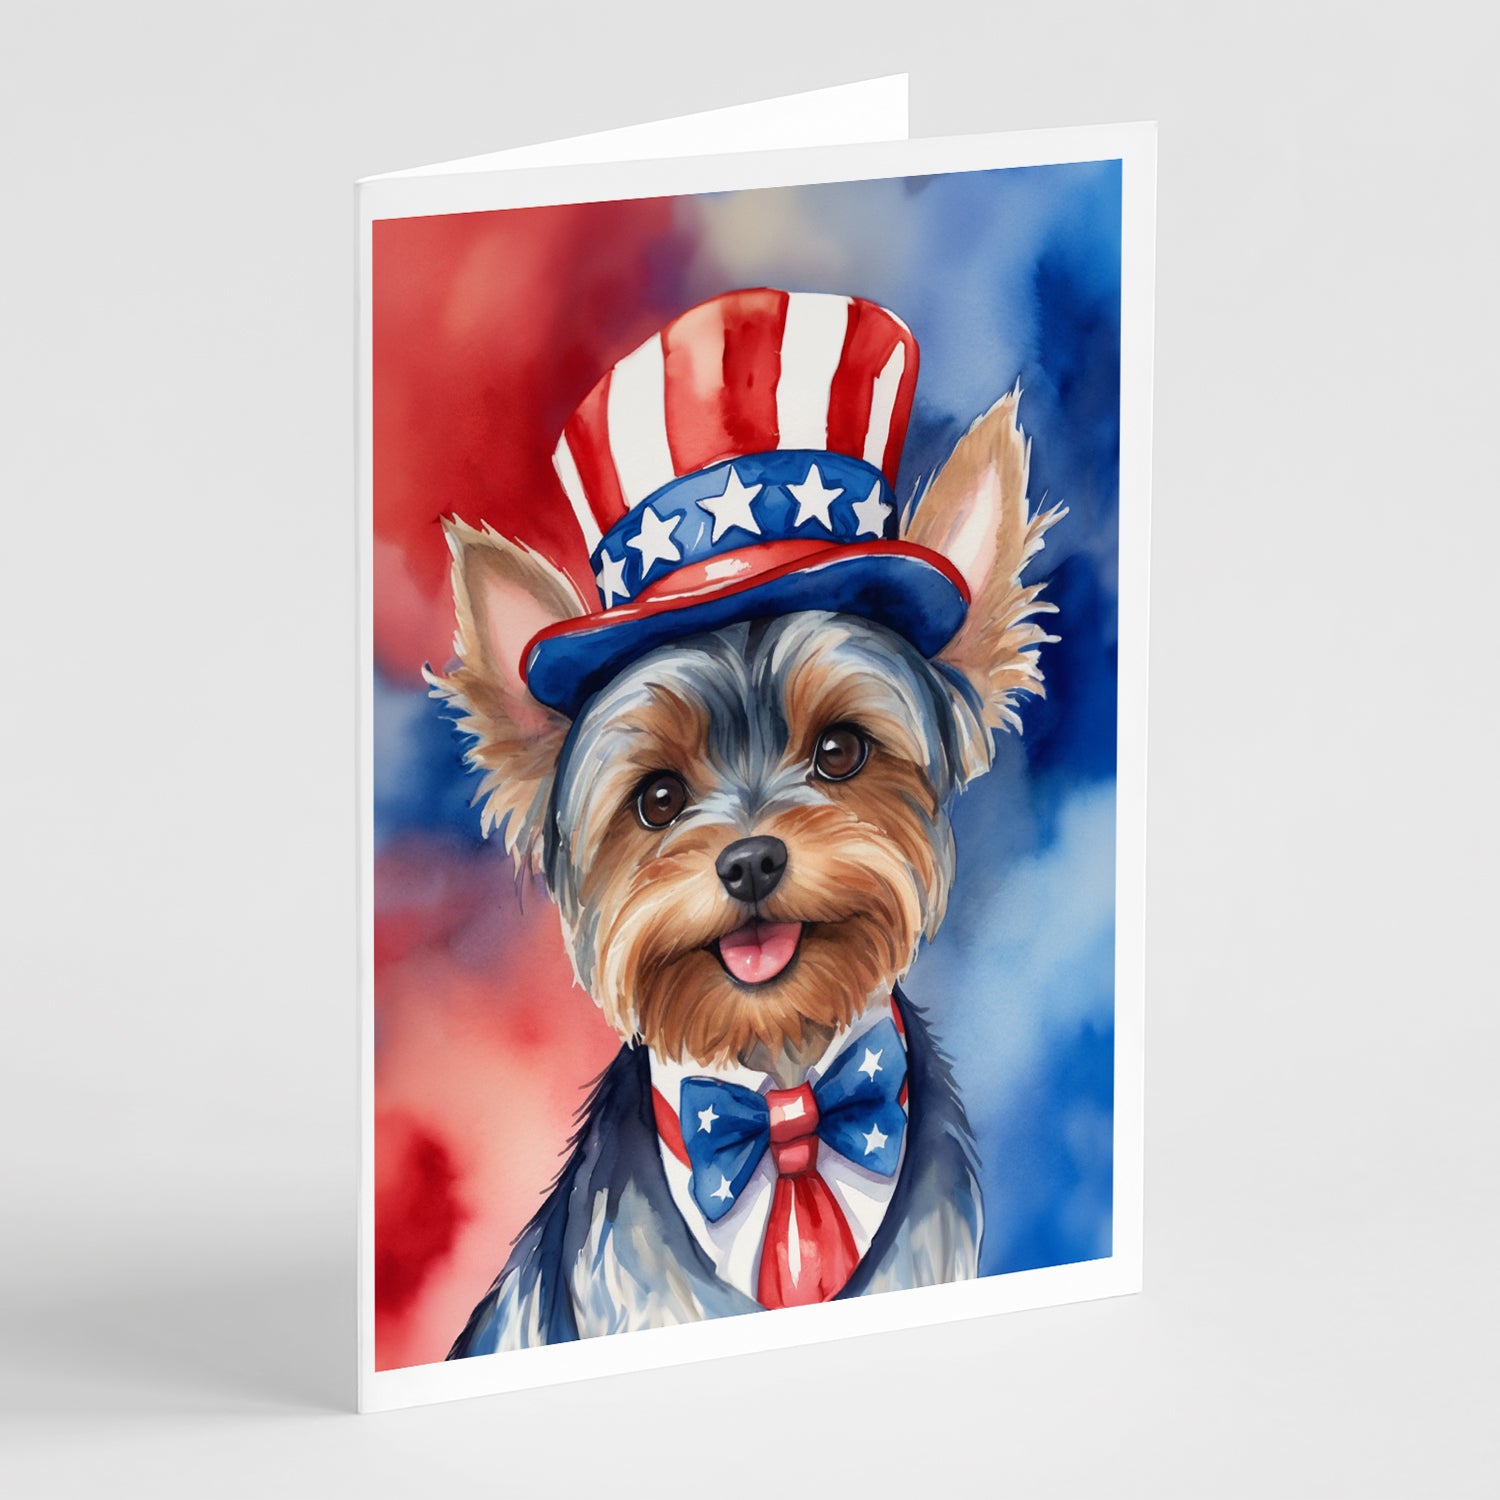 Buy this Yorkshire Terrier Patriotic American Greeting Cards Pack of 8